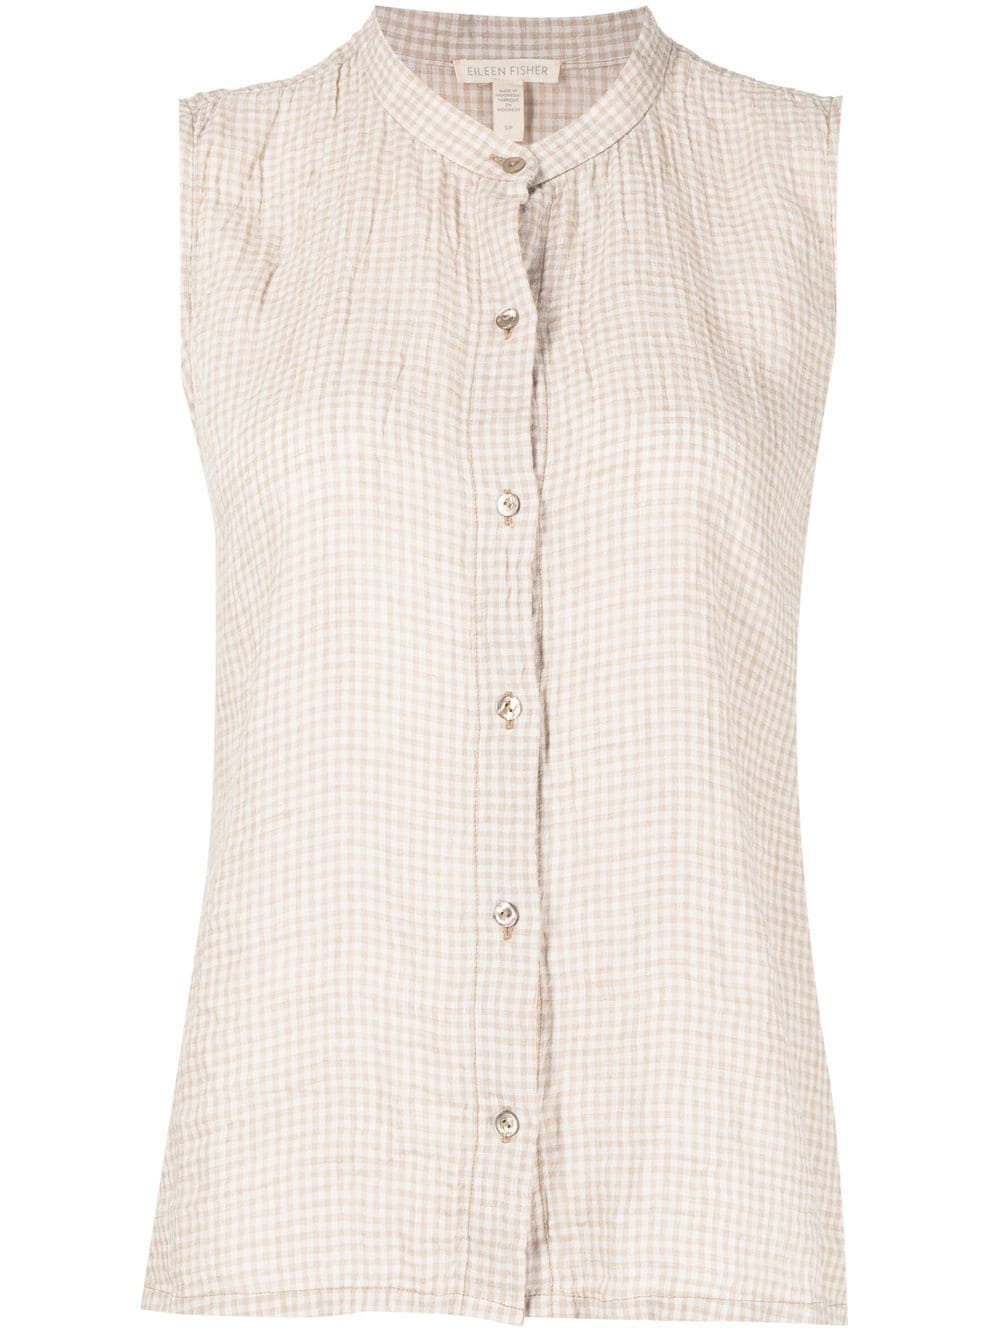 Image 1 of Eileen Fisher قميص بأزرار وبدون أكمام